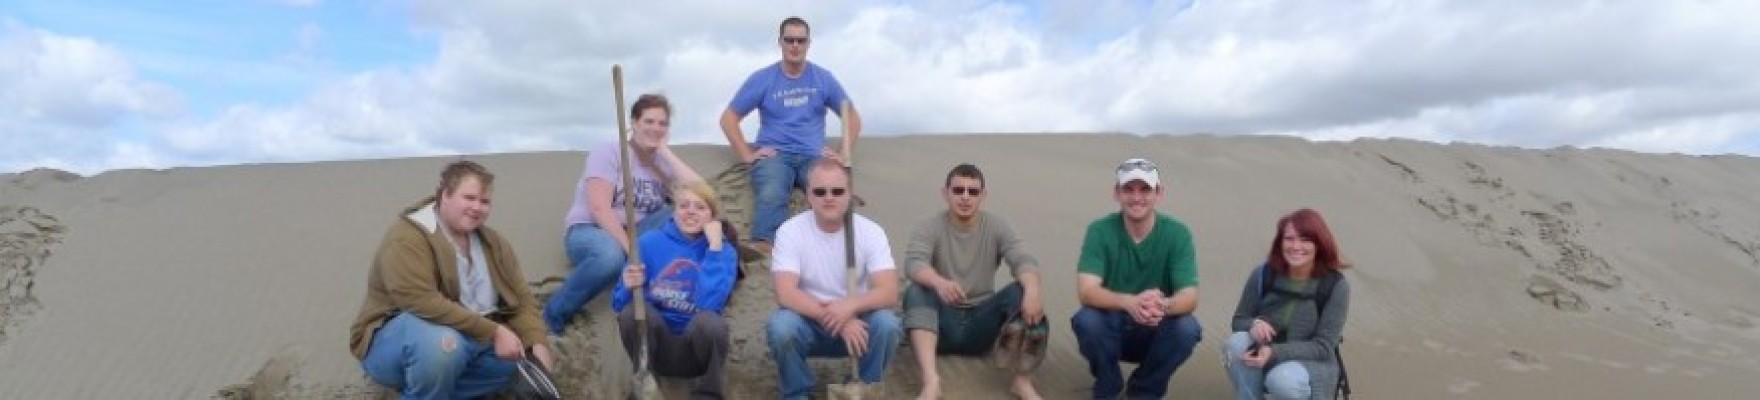 Students on sand dune